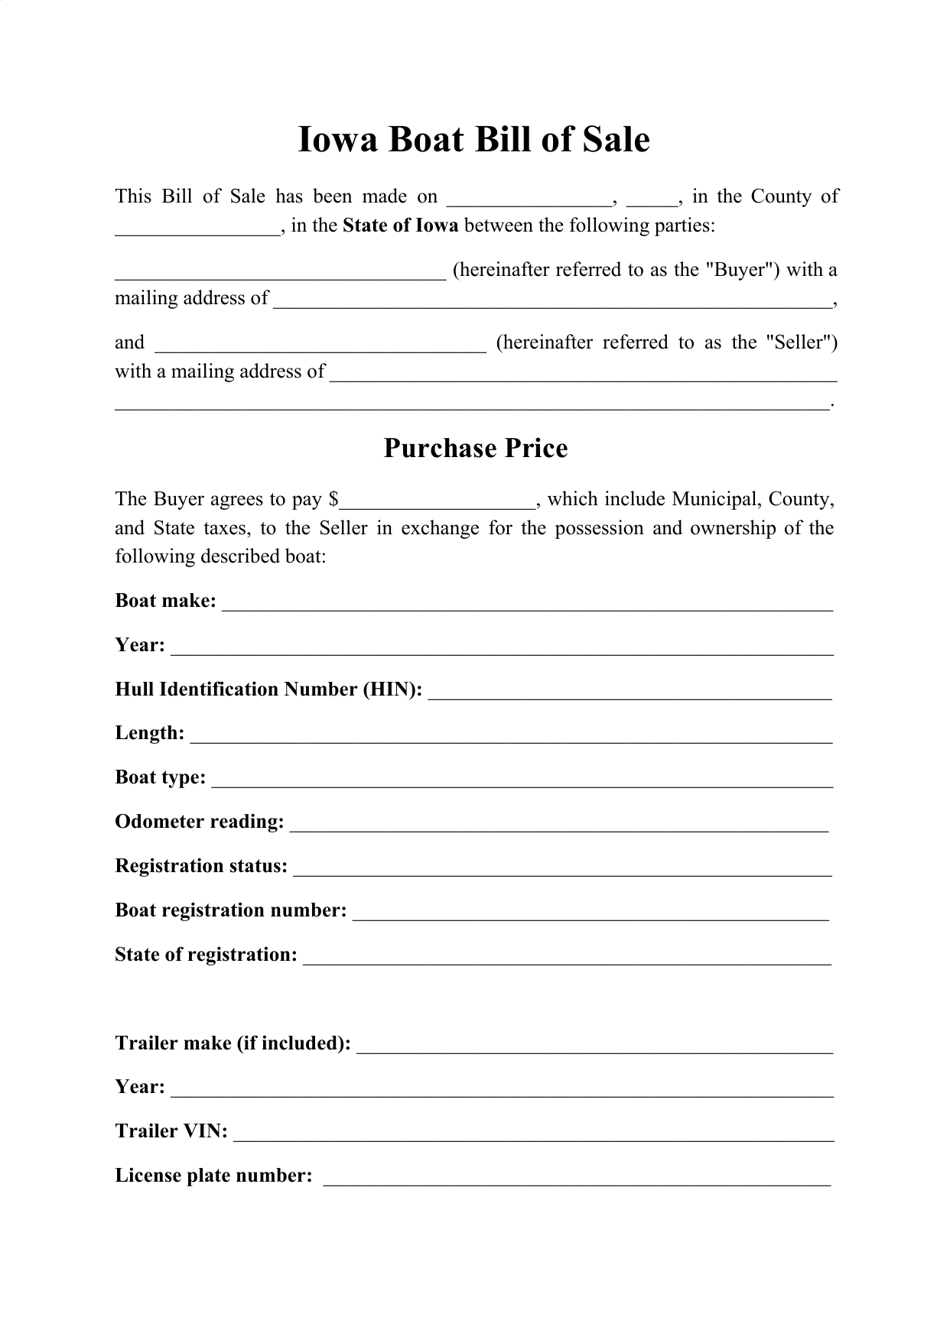 Boat Bill of Sale Form - Iowa, Page 1